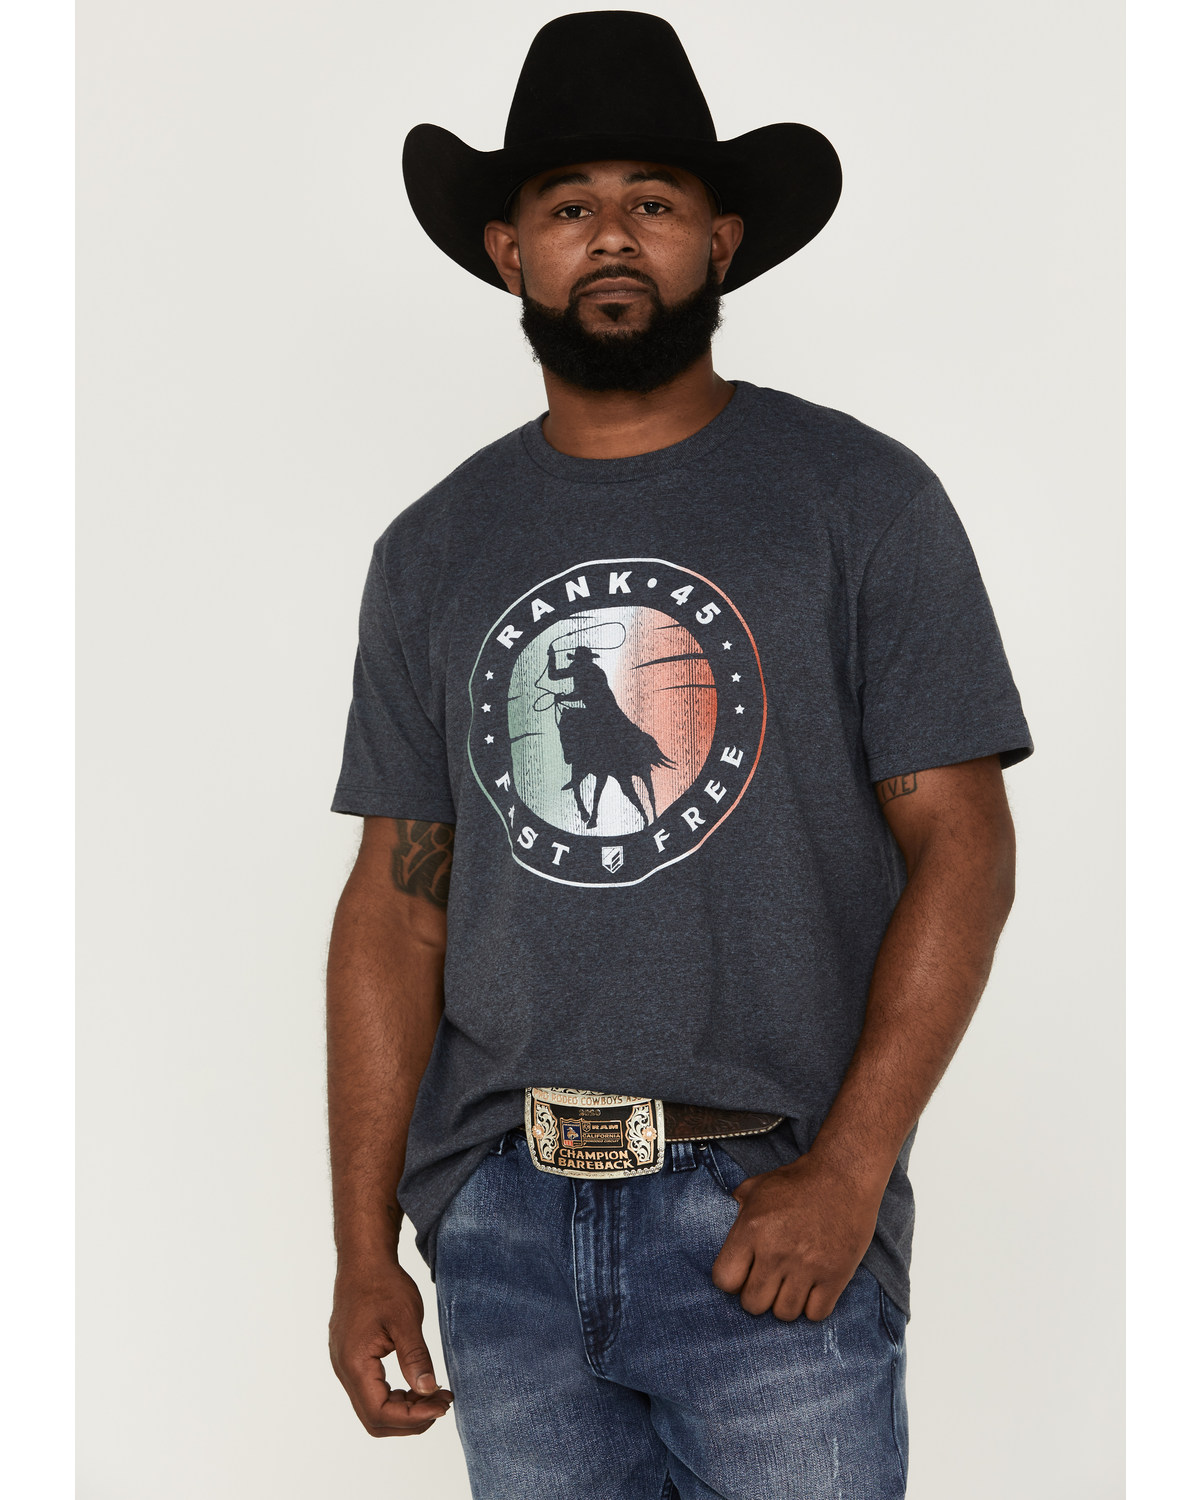 RANK 45® Men's Roper Circle Logo Short Sleeve Graphic T-Shirt